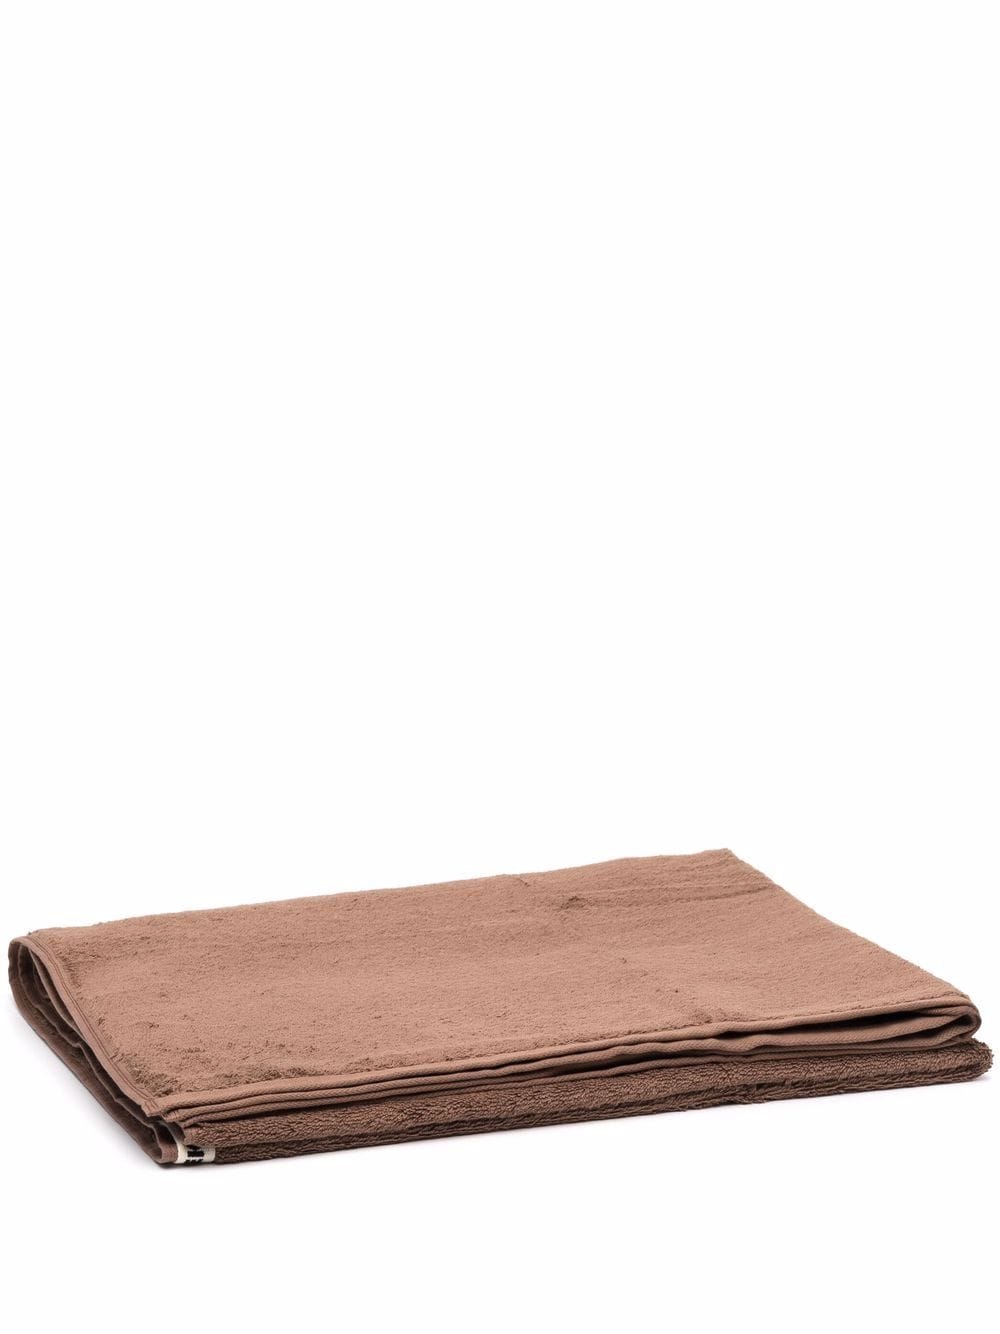 TEKLA organic cotton towel - Brown von TEKLA